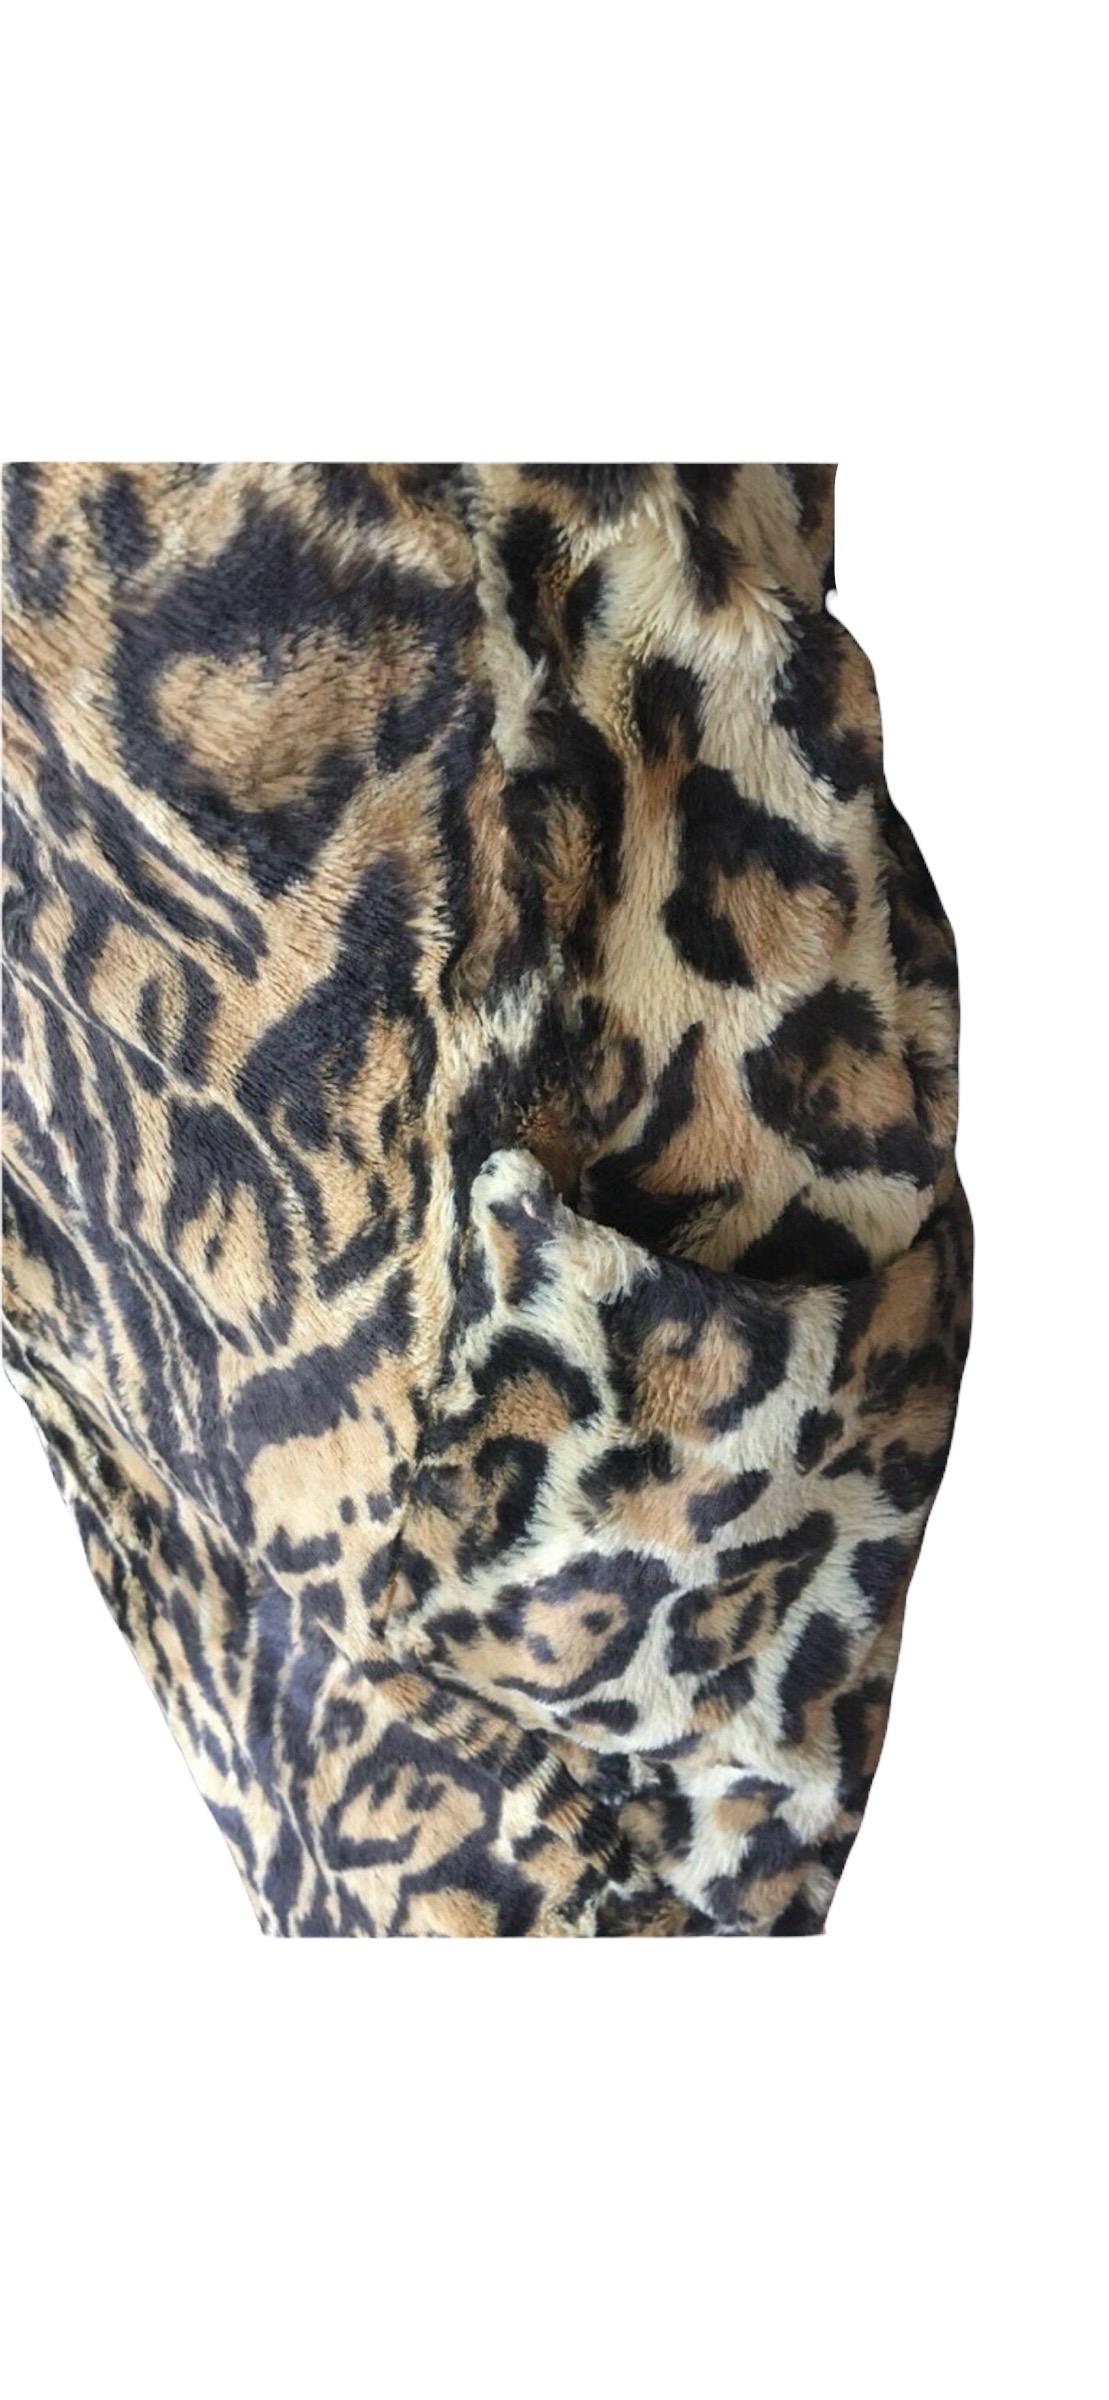 Gianni Versace F/W 1996 Runway Vintage Faux Fur Leopard Dress 3